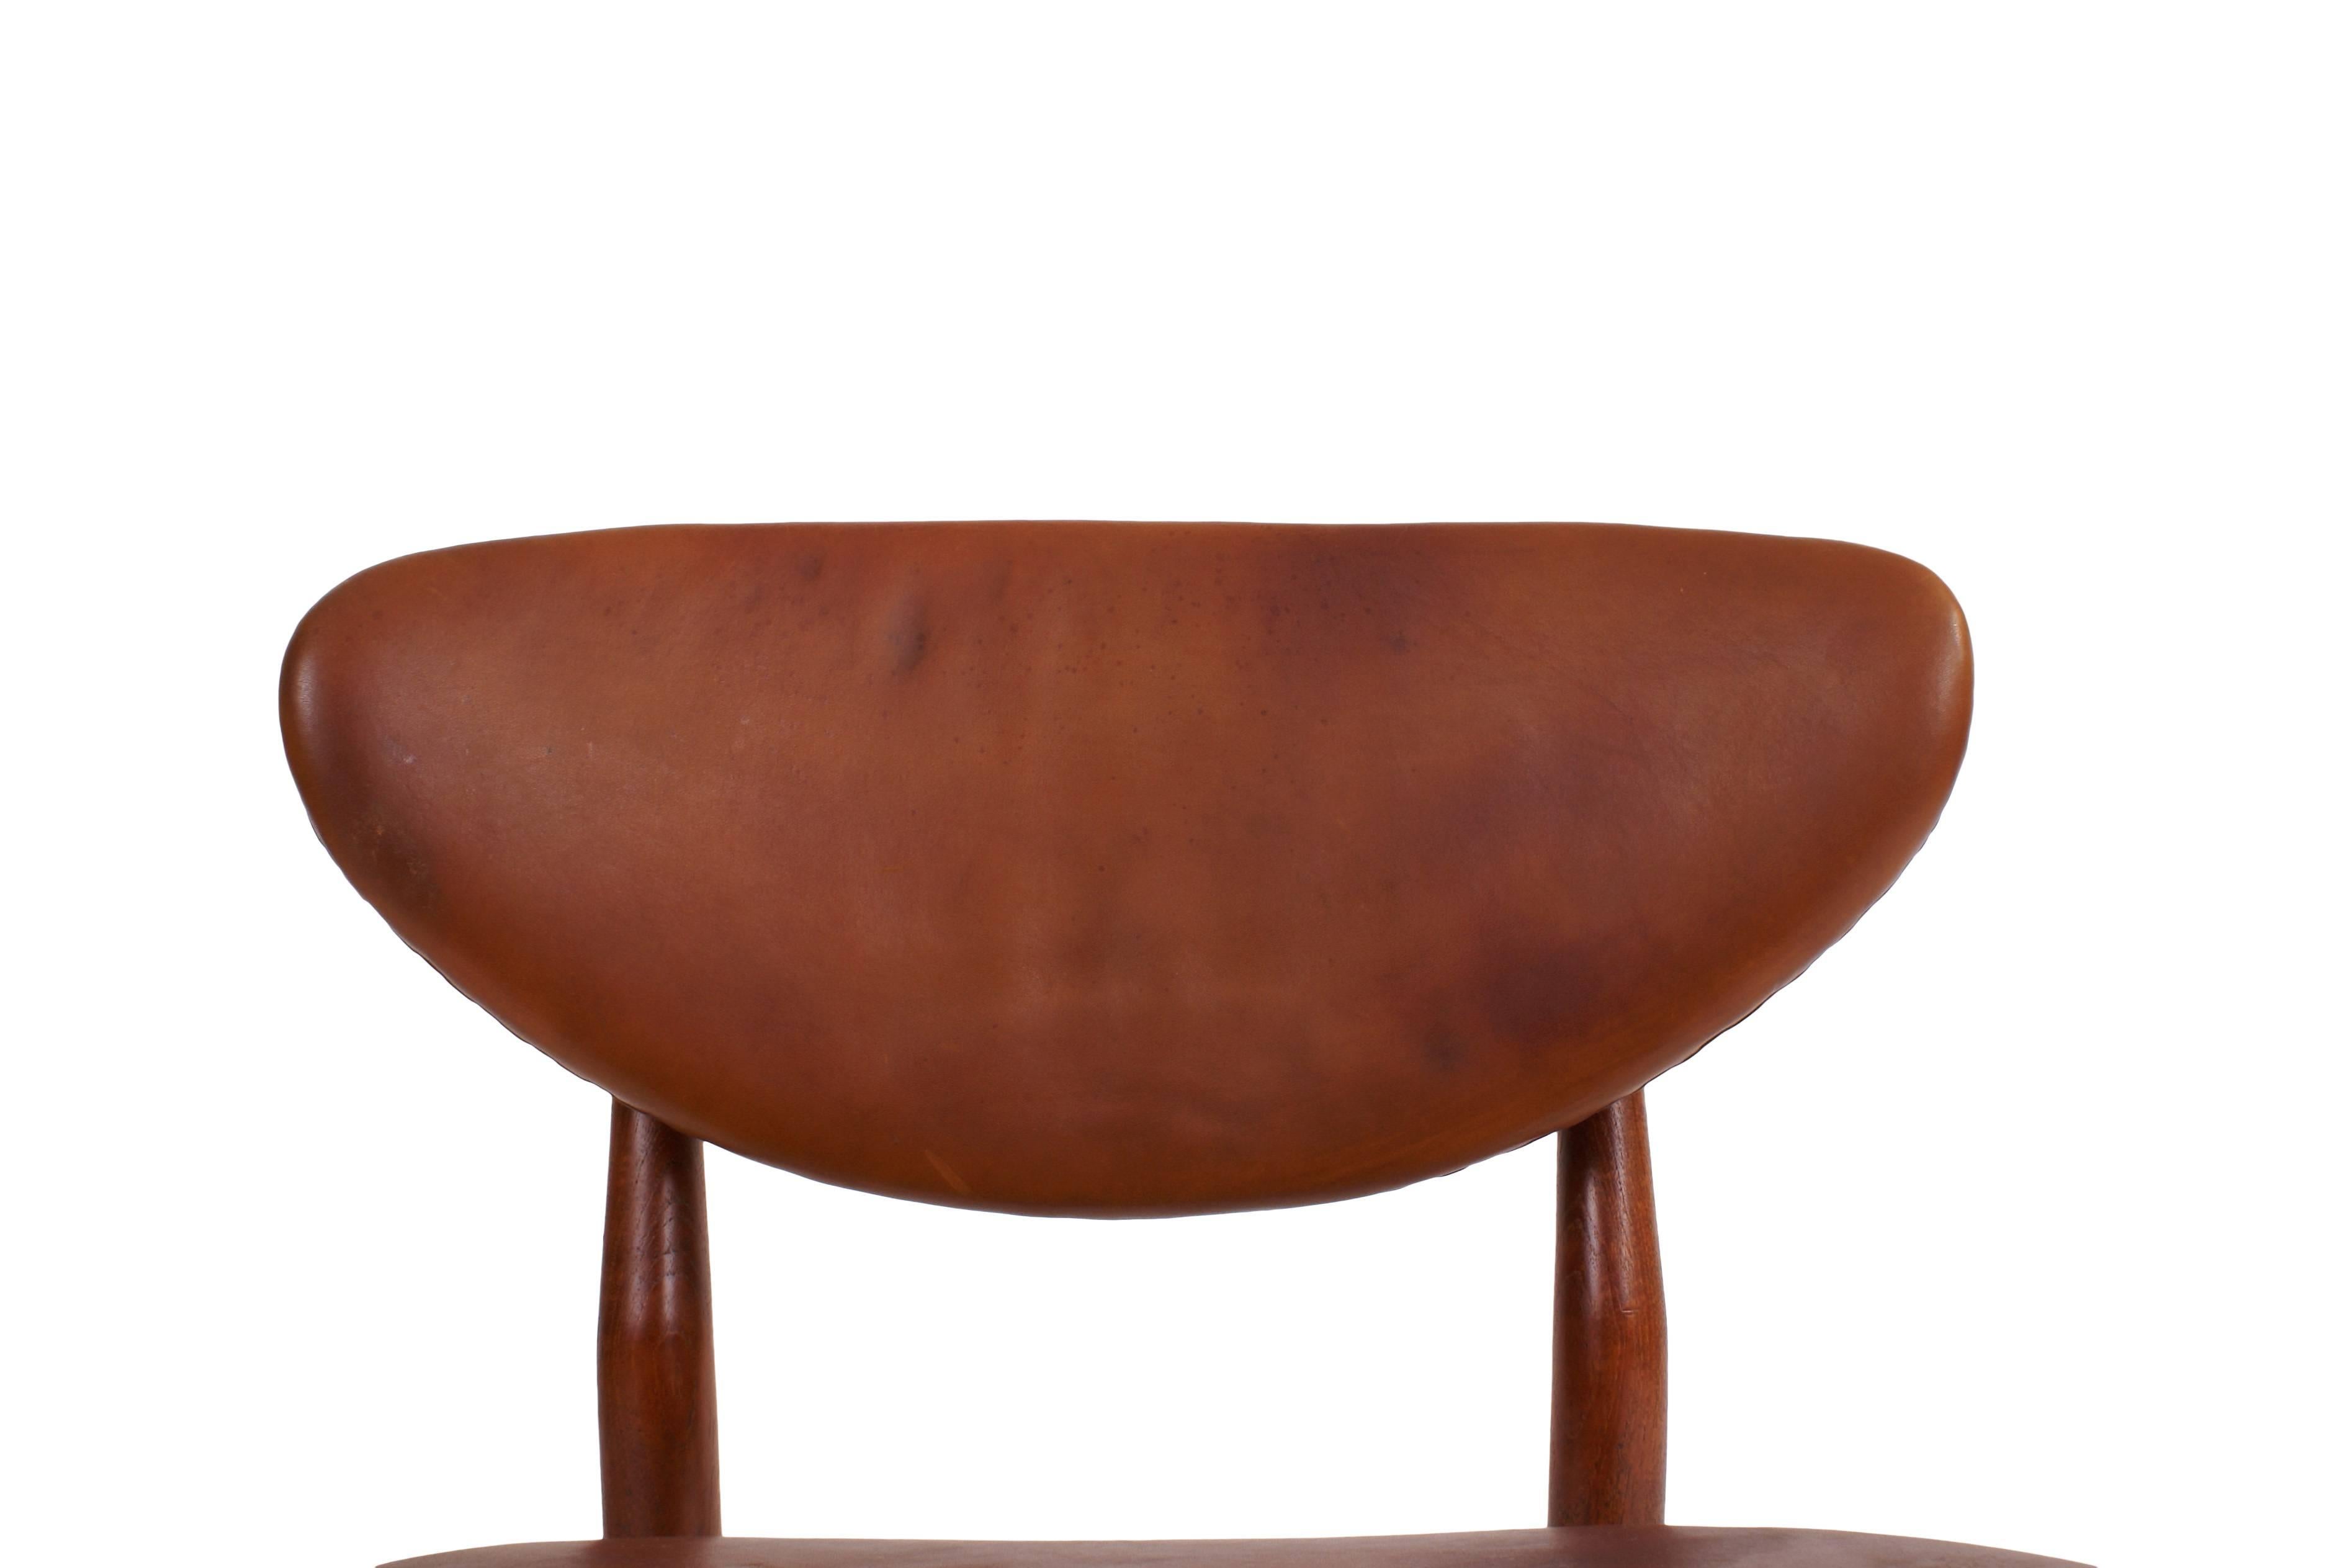 Danish Finn Juhl NV55 Chair for Niels Vodder in Teak and Natural Leather, 1955